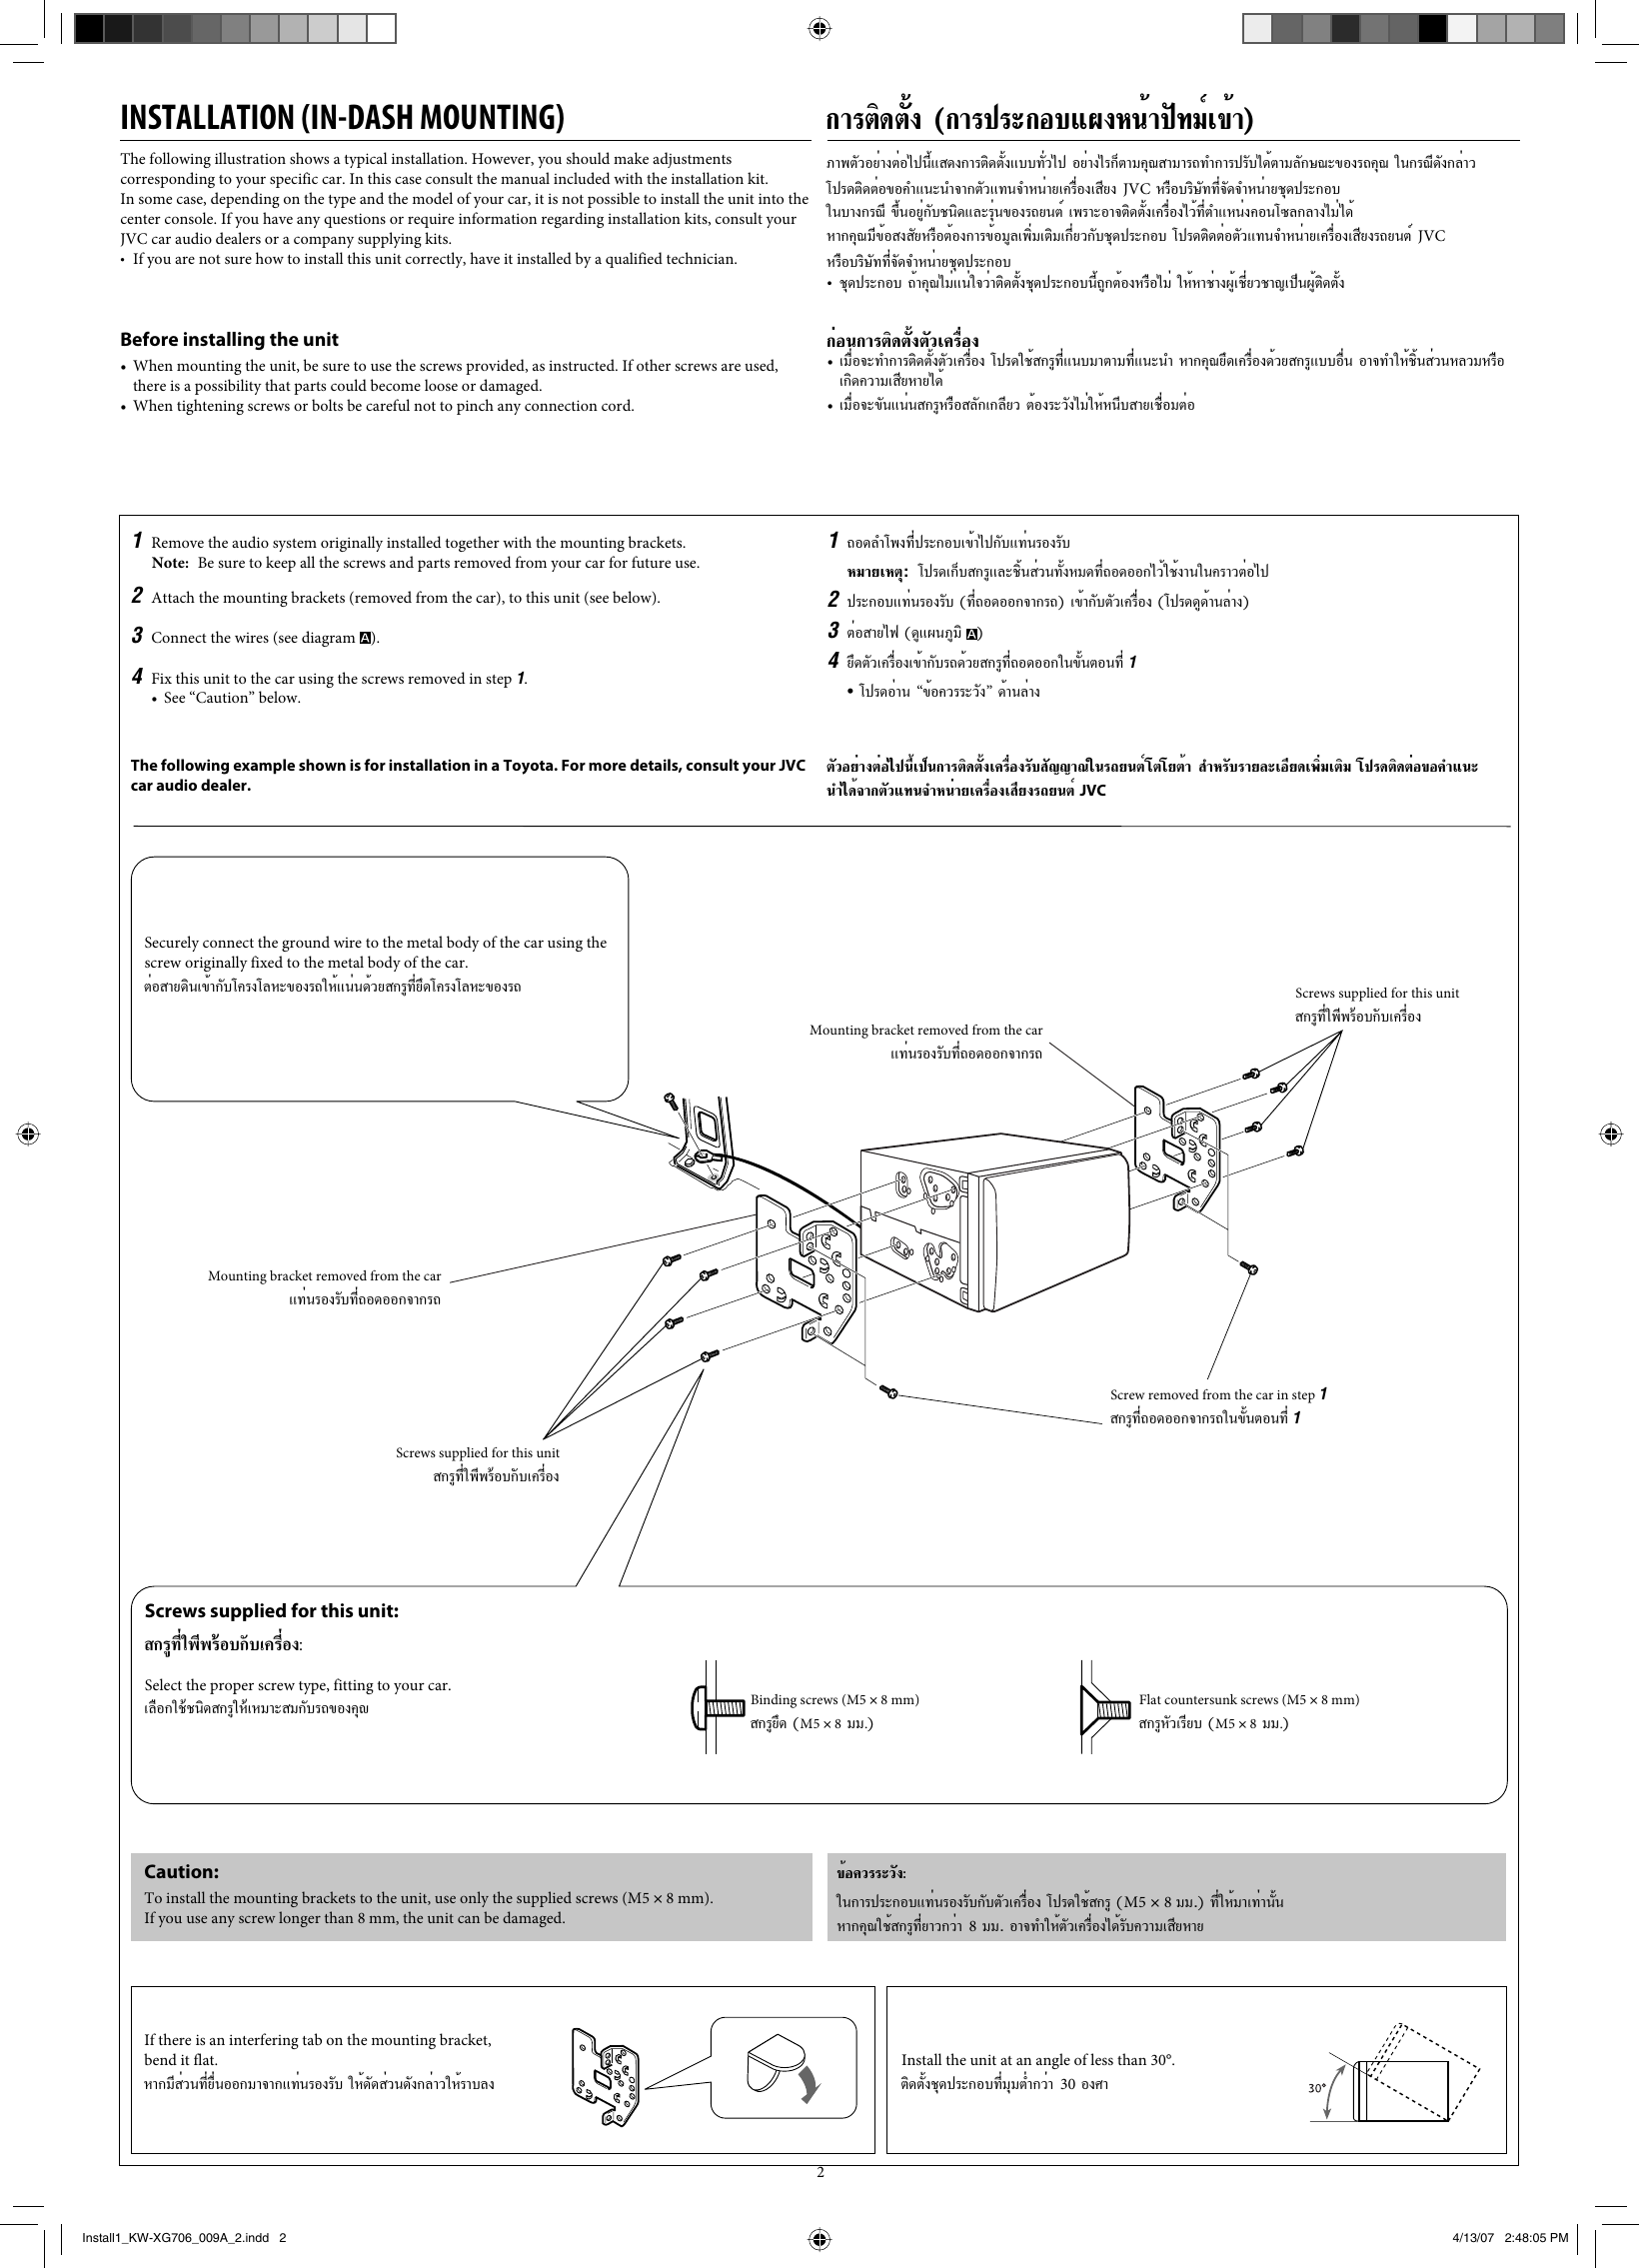 Page 2 of 4 - JVC KW-XG705U/UH Install1_KW-XG706_009A_2 User Manual GET0458-006A